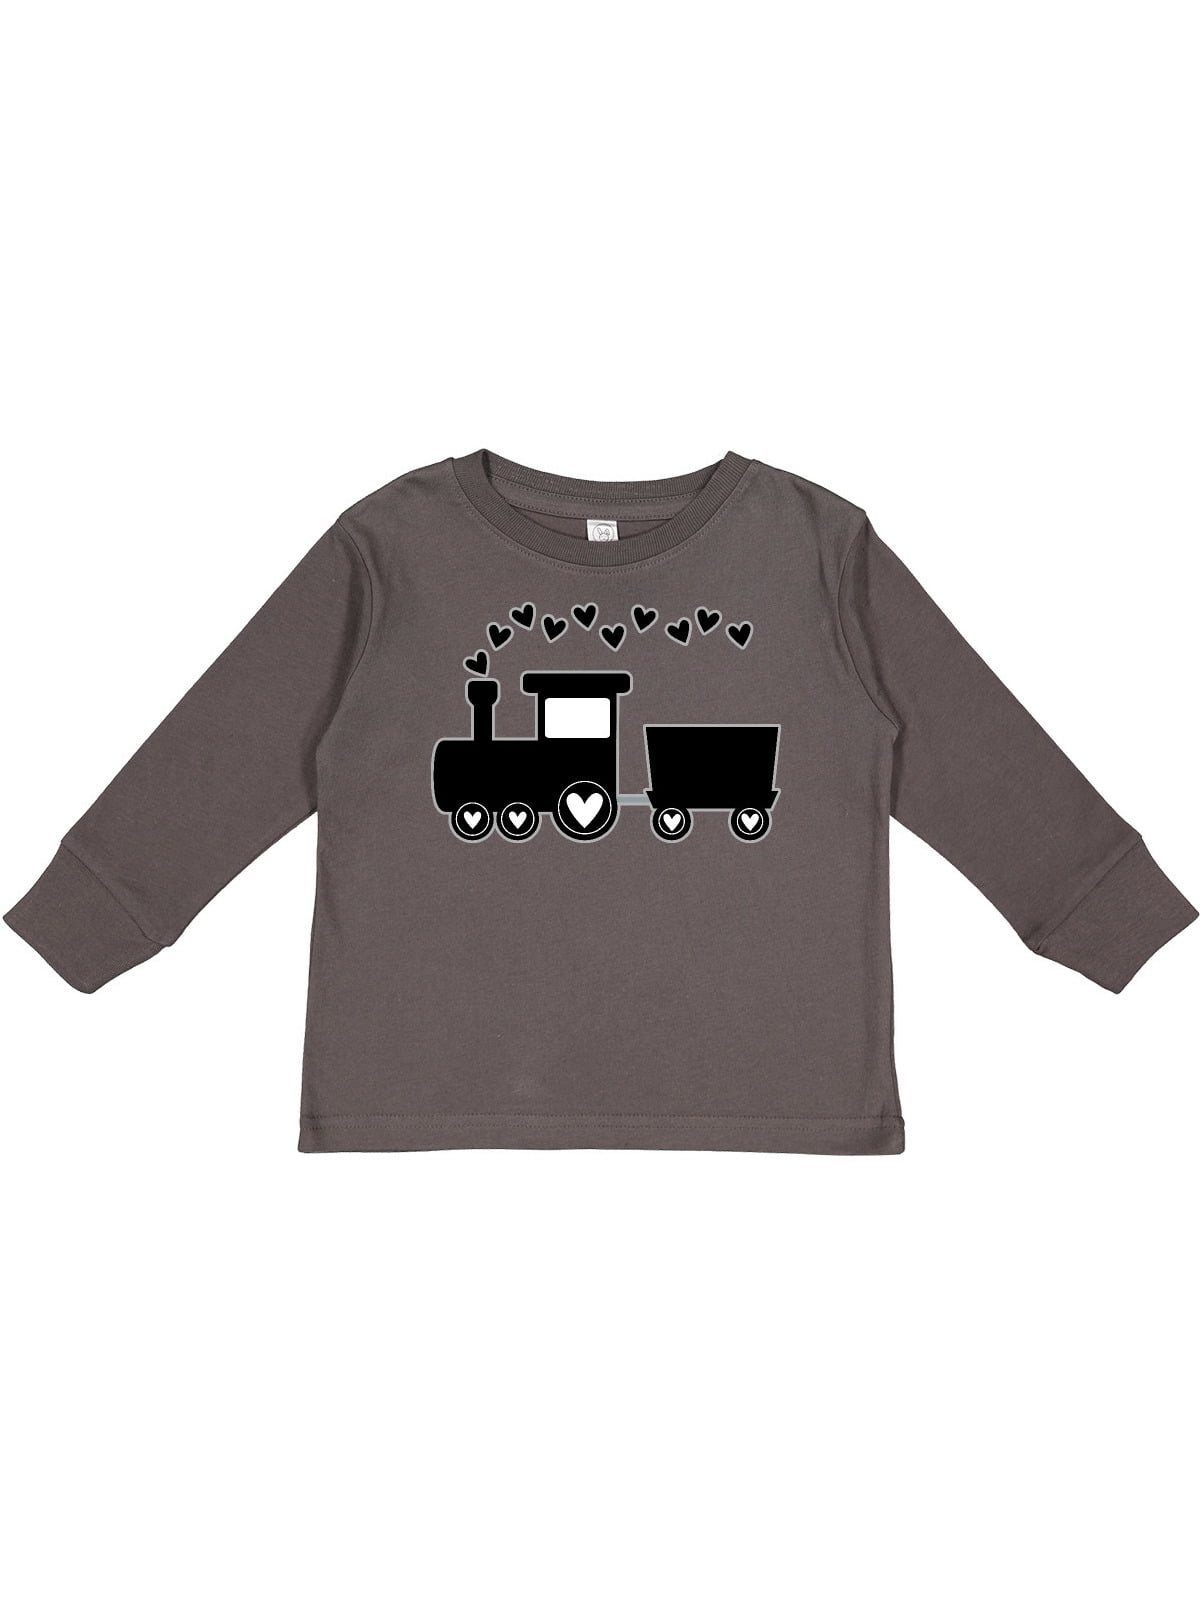 It's My Party Choo Choo Train Birthday Gift Idea Cute Long sleeve kids T-Shirt 